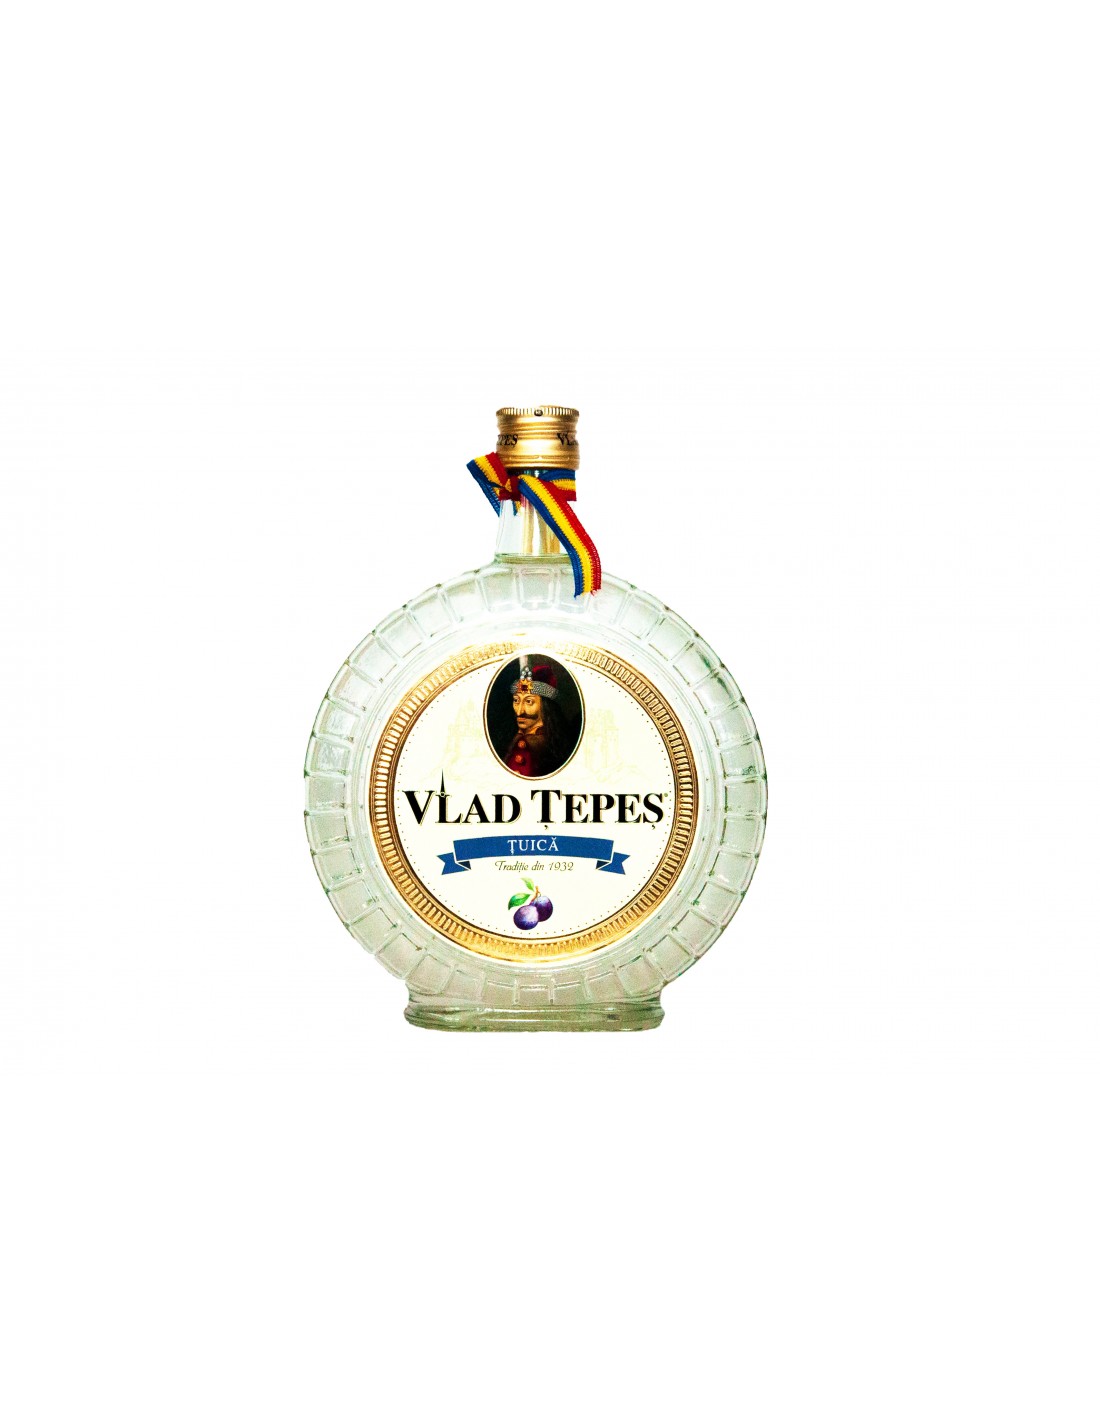 Tuica de prune Vlad Tepes, 45% alc., 0.7L, Romania alcooldiscount.ro